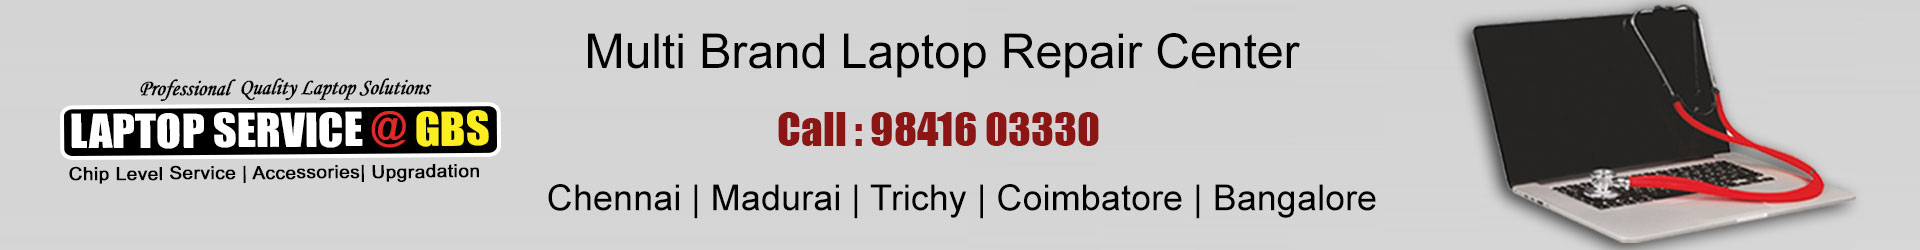 laptop service center in anna nagar chennai